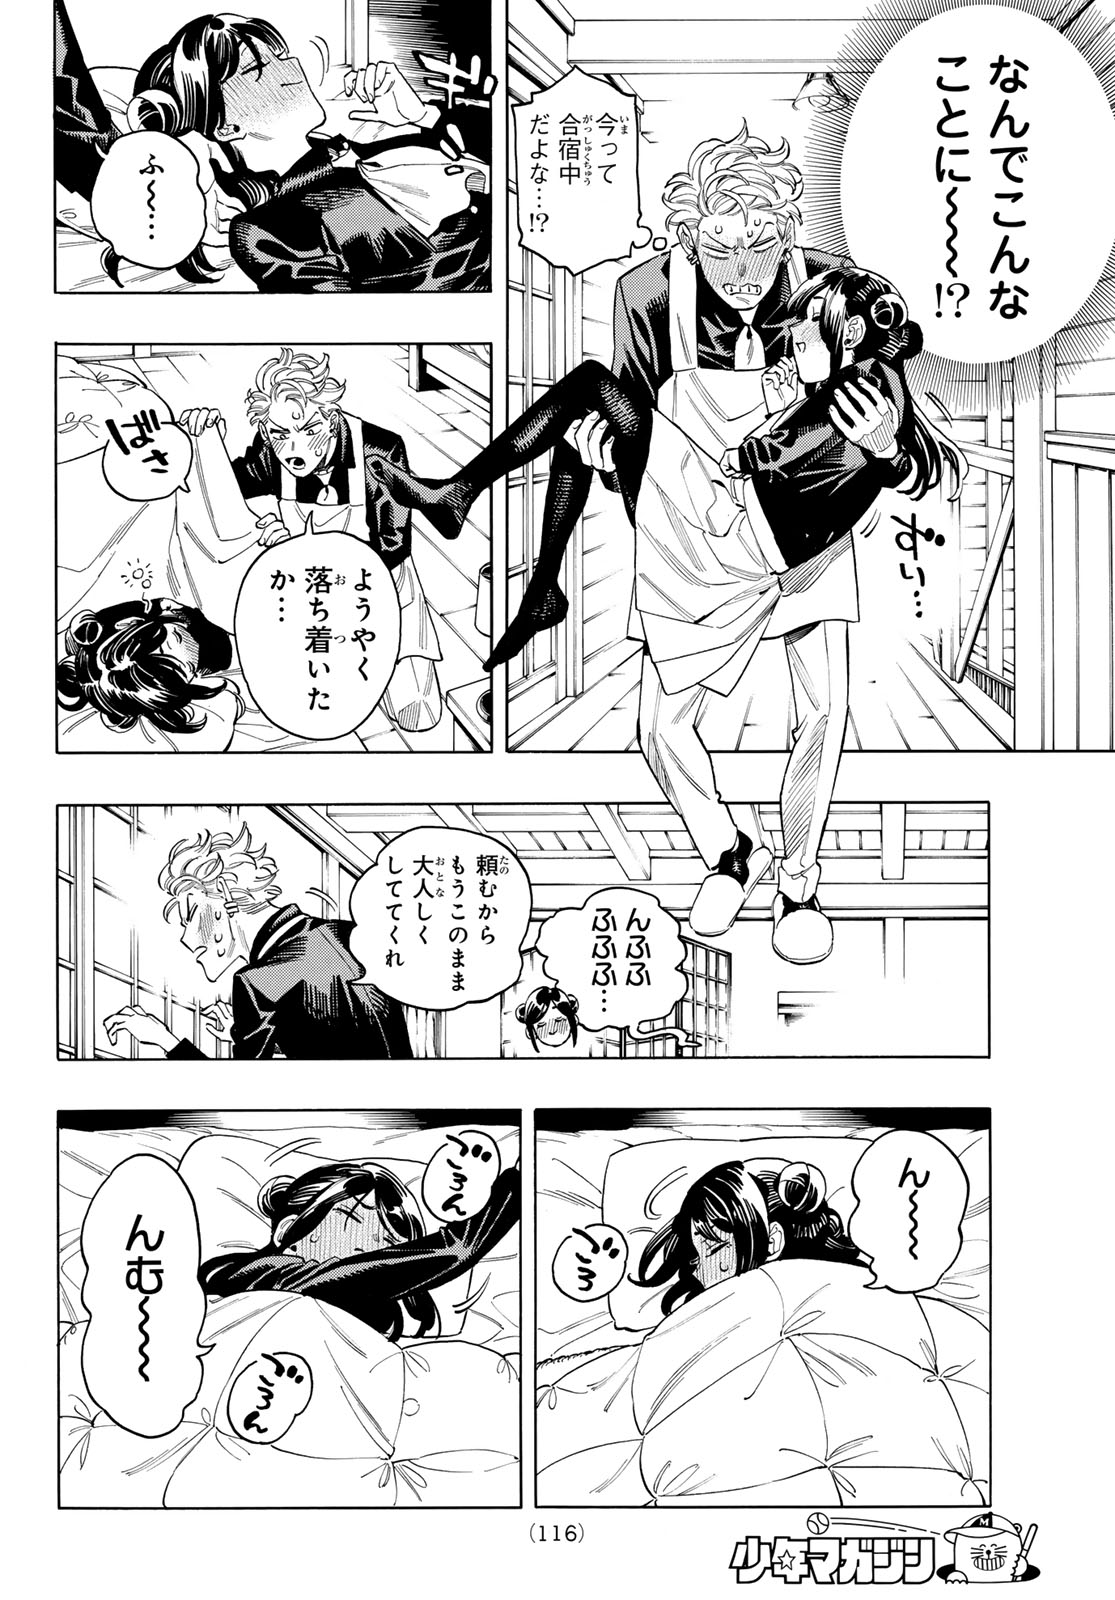 Akabane Honeko no Bodyguard - Chapter 87 - Page 5